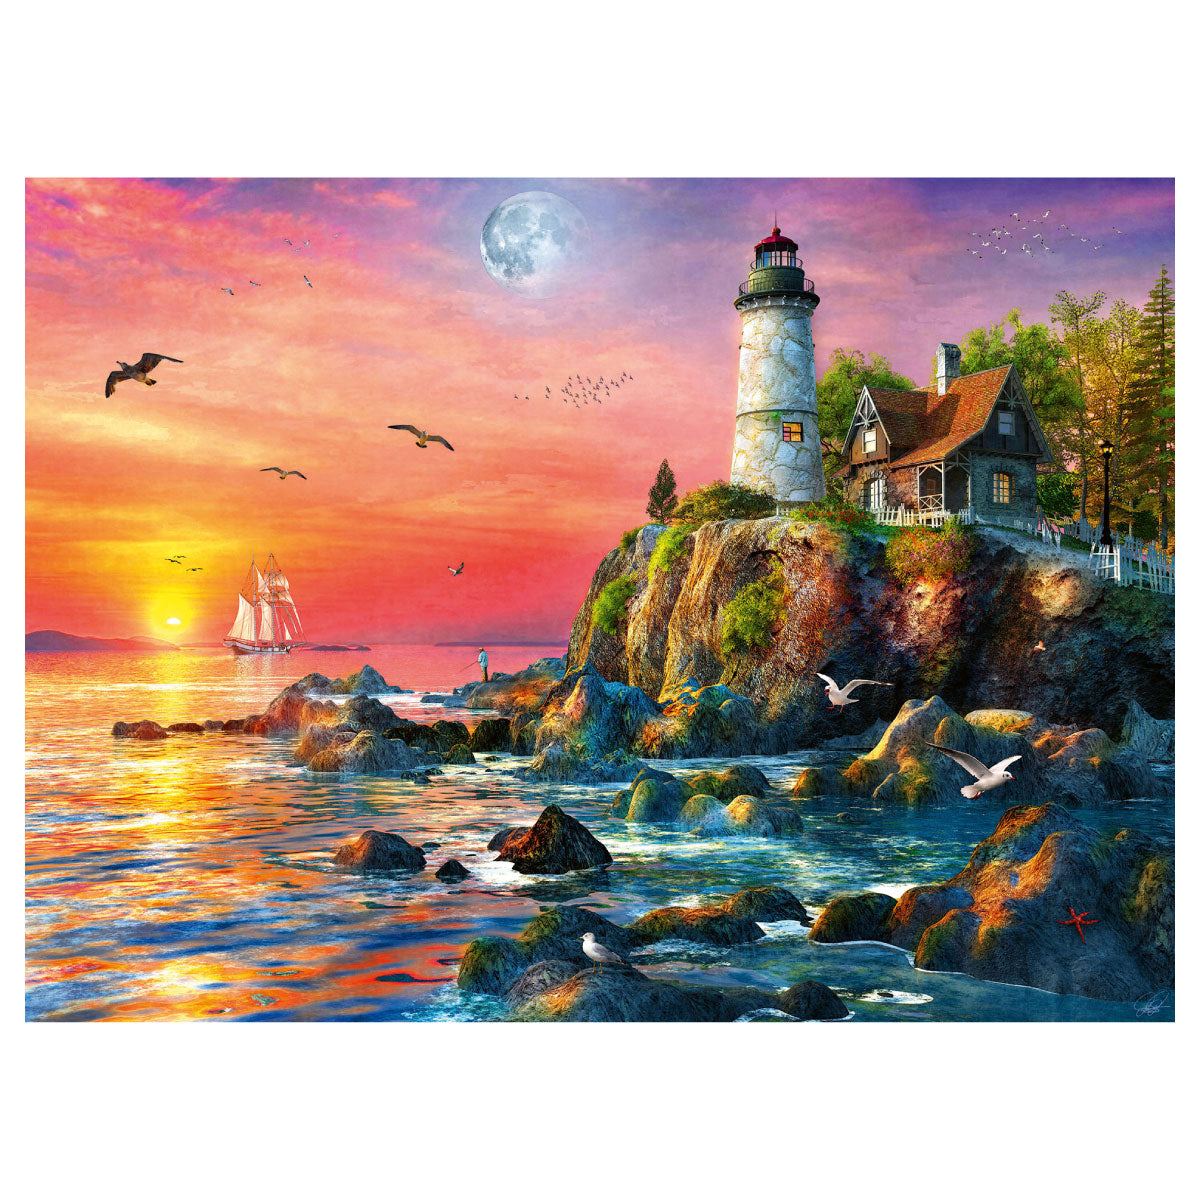 Lighthouse at Sunset - 500 pc Larger Pieces Jigsaw